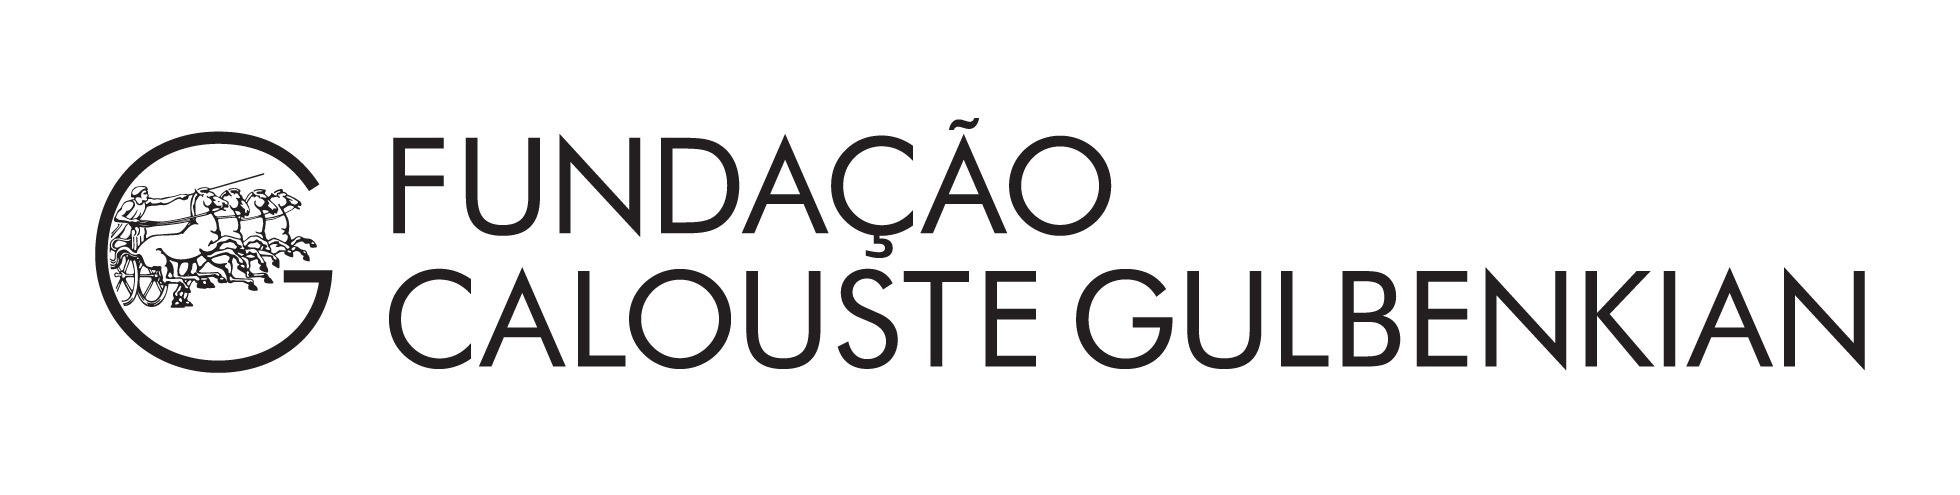 Logo for Fundacao Calouste Gulbenkian, black text on a white background